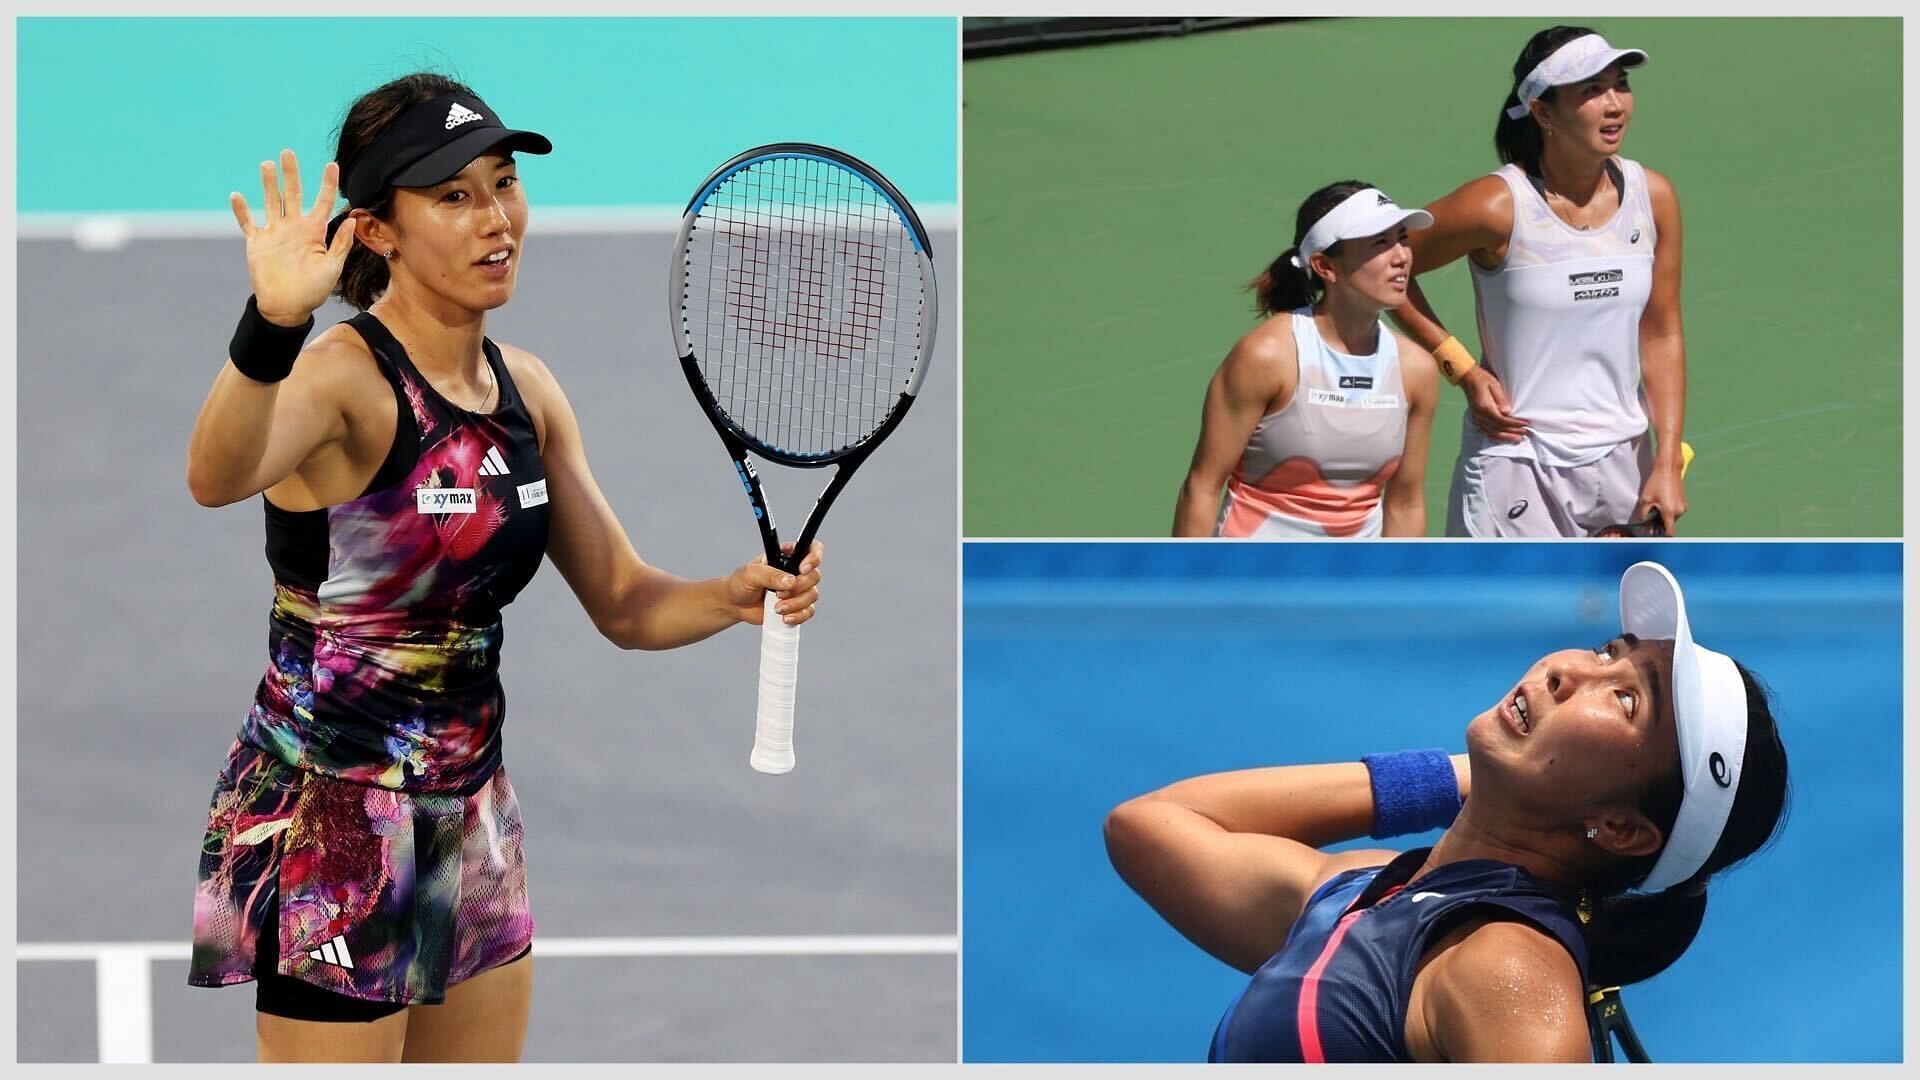 Miyu Kato and Aldila Sutjiadi exited the 2023 French Open women